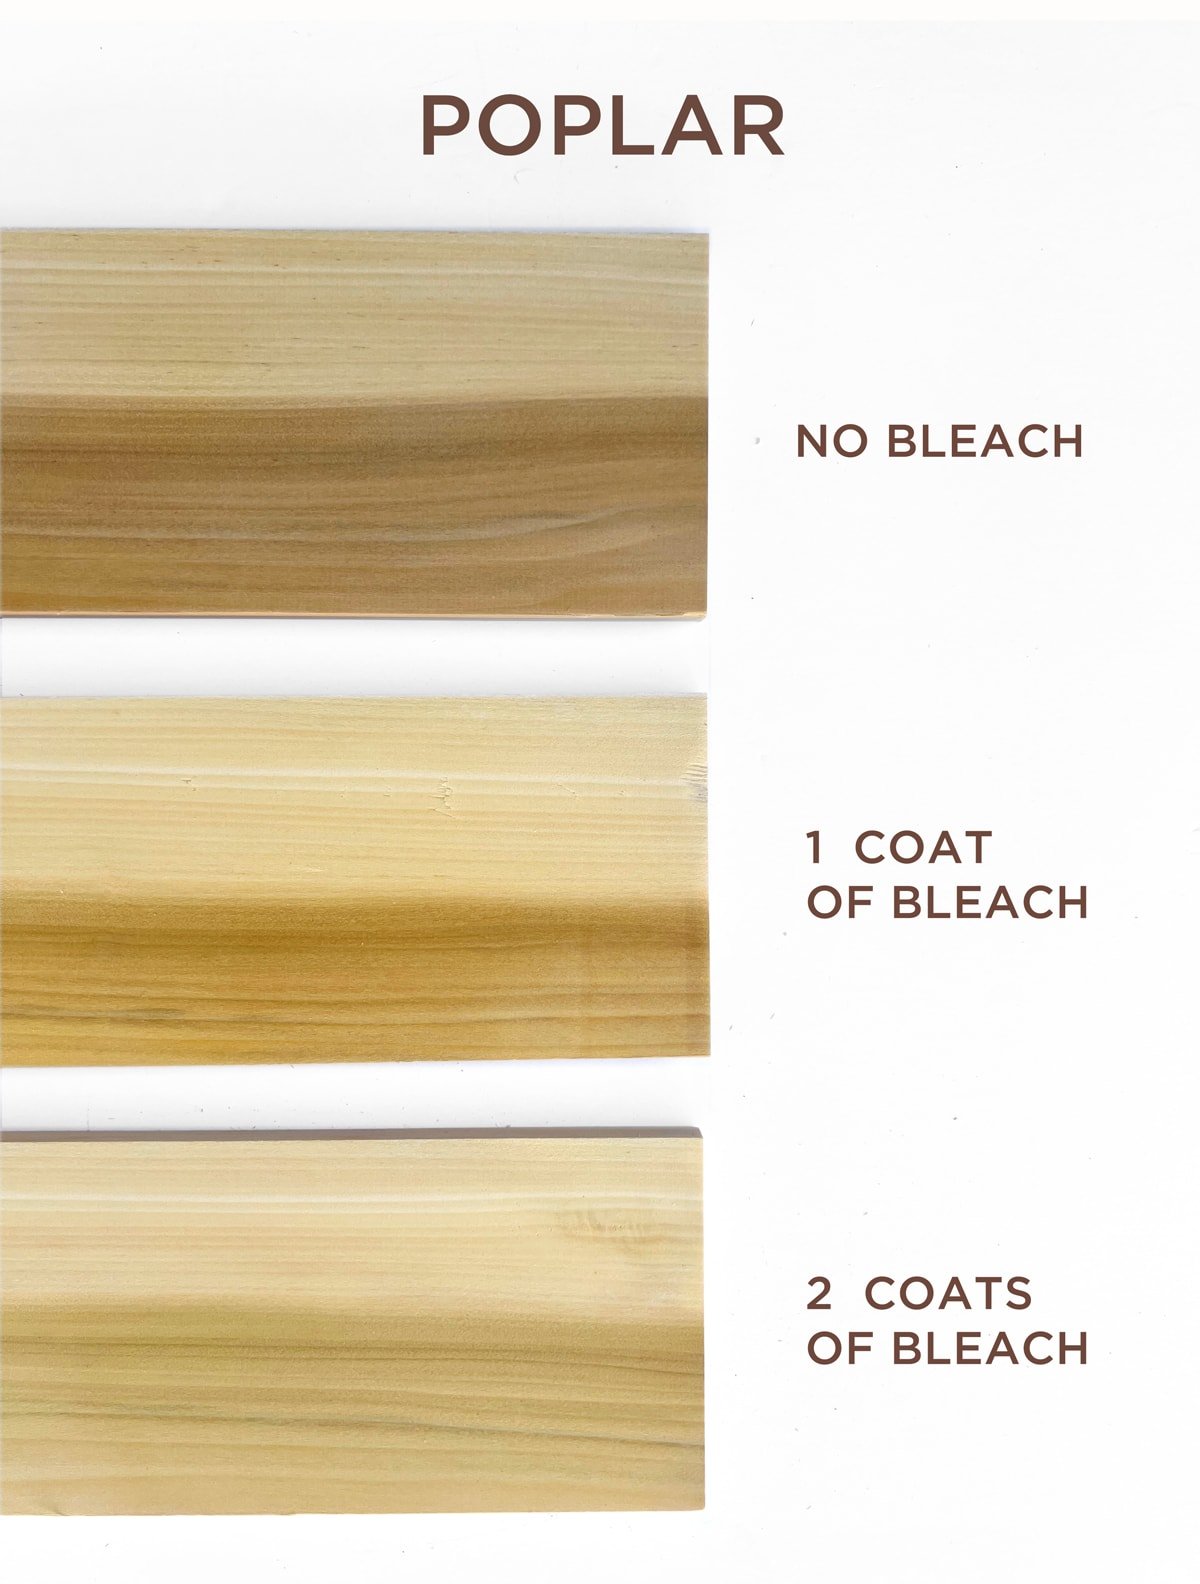 how to bleach poplar wood